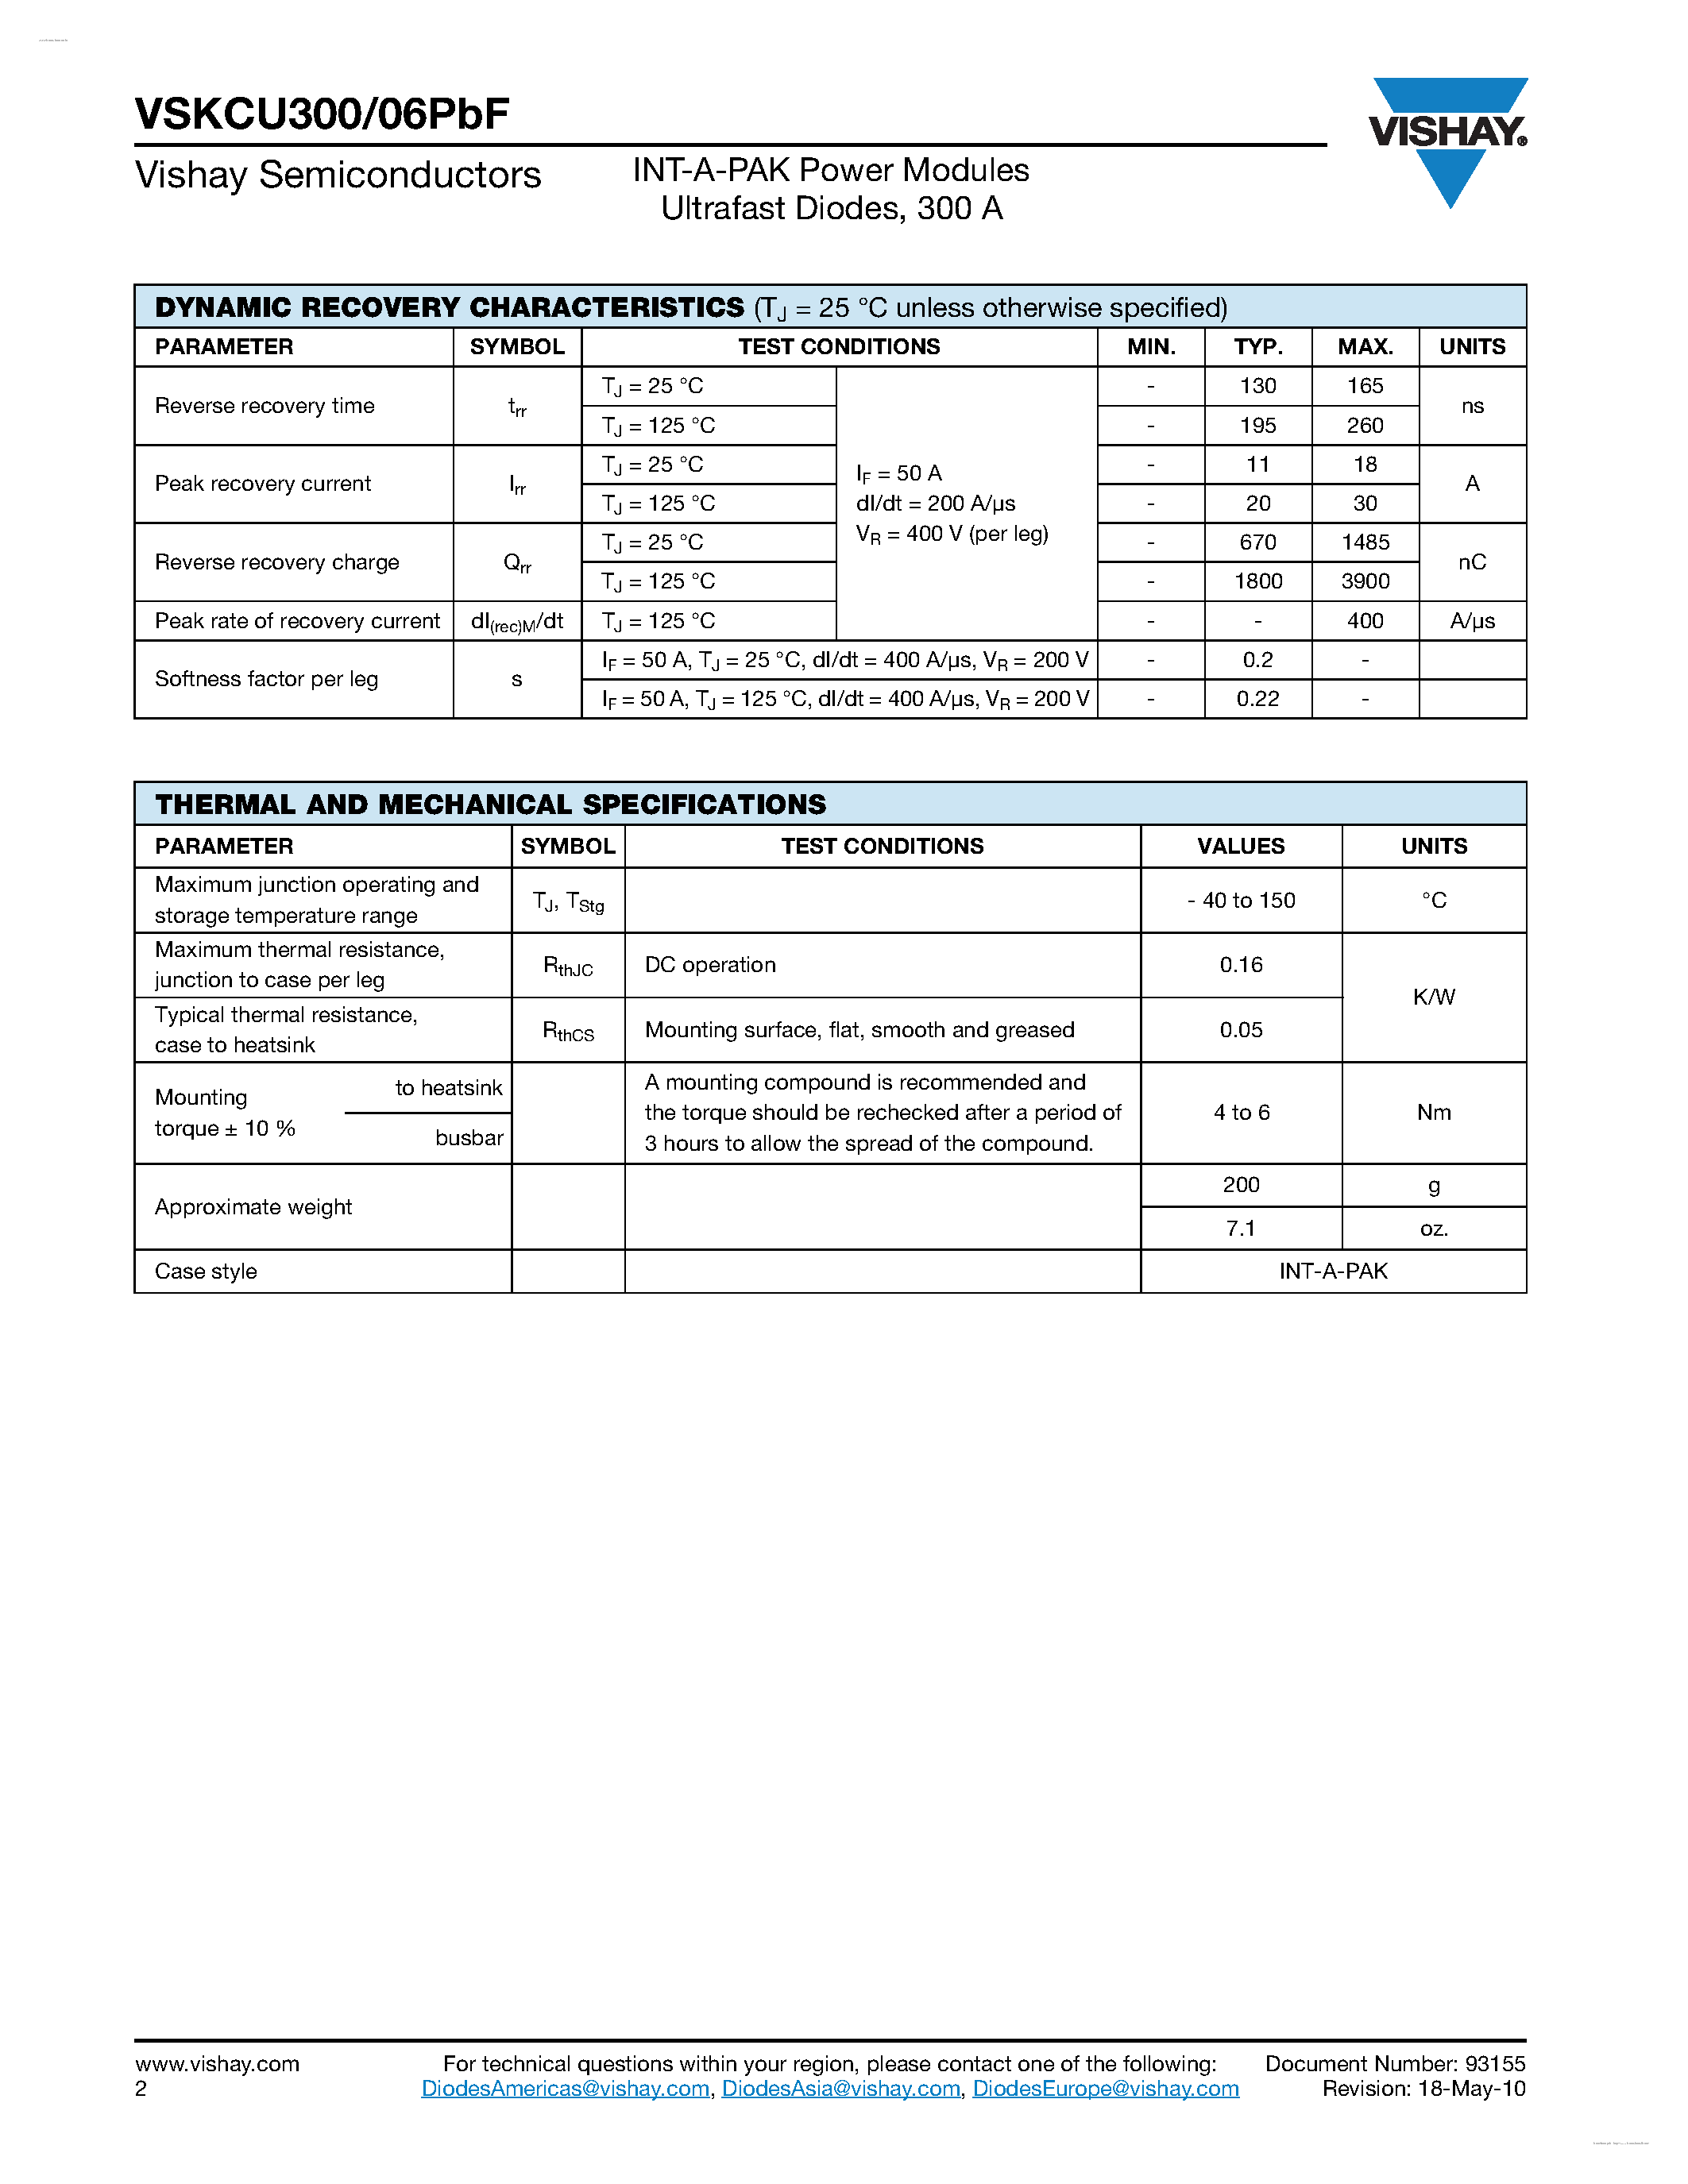 Даташит VSKCU300/06PBF - INT-A-PAK Power Modules Ultrafast Diodes страница 2